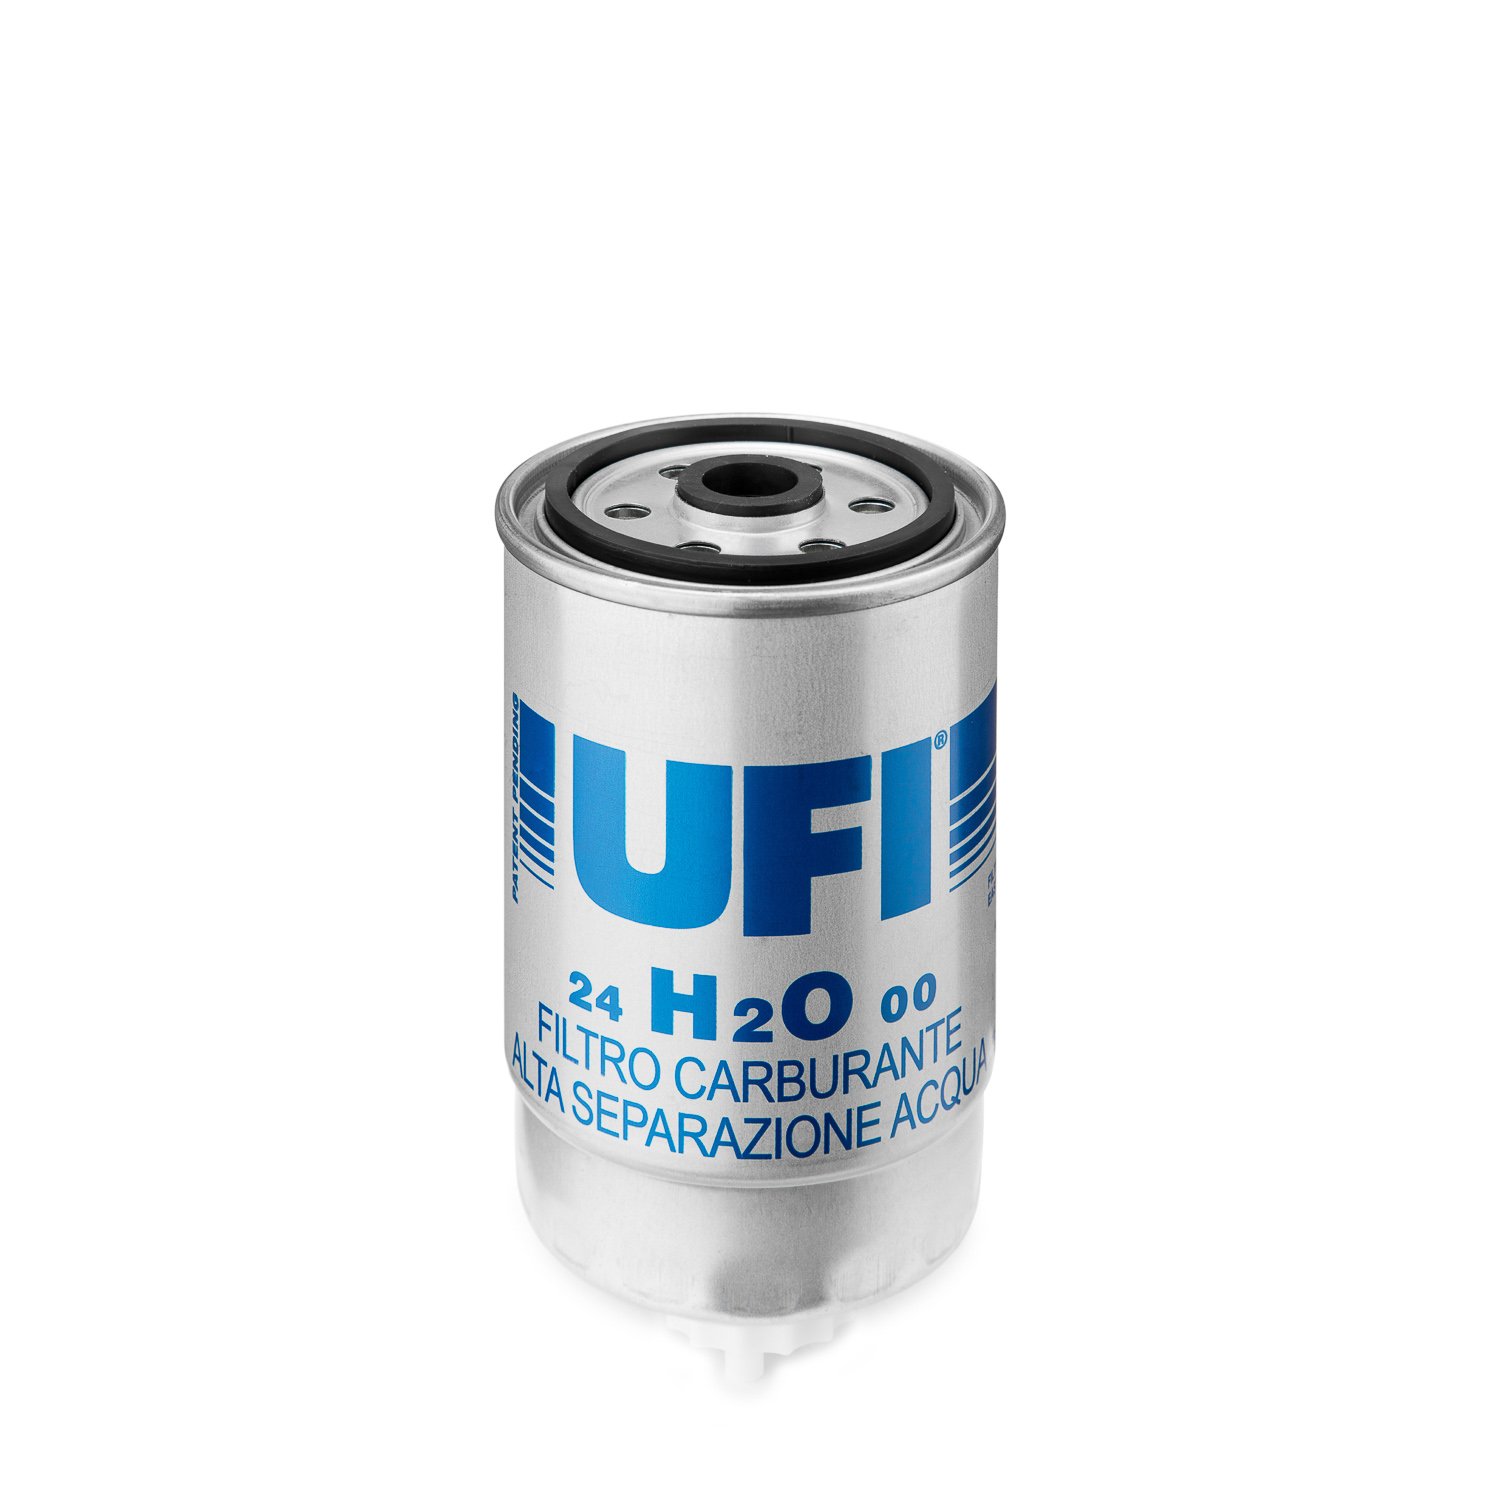 UFI FILTERS Filters 24.H2O.00 Dieselfilter von UFI FILTERS